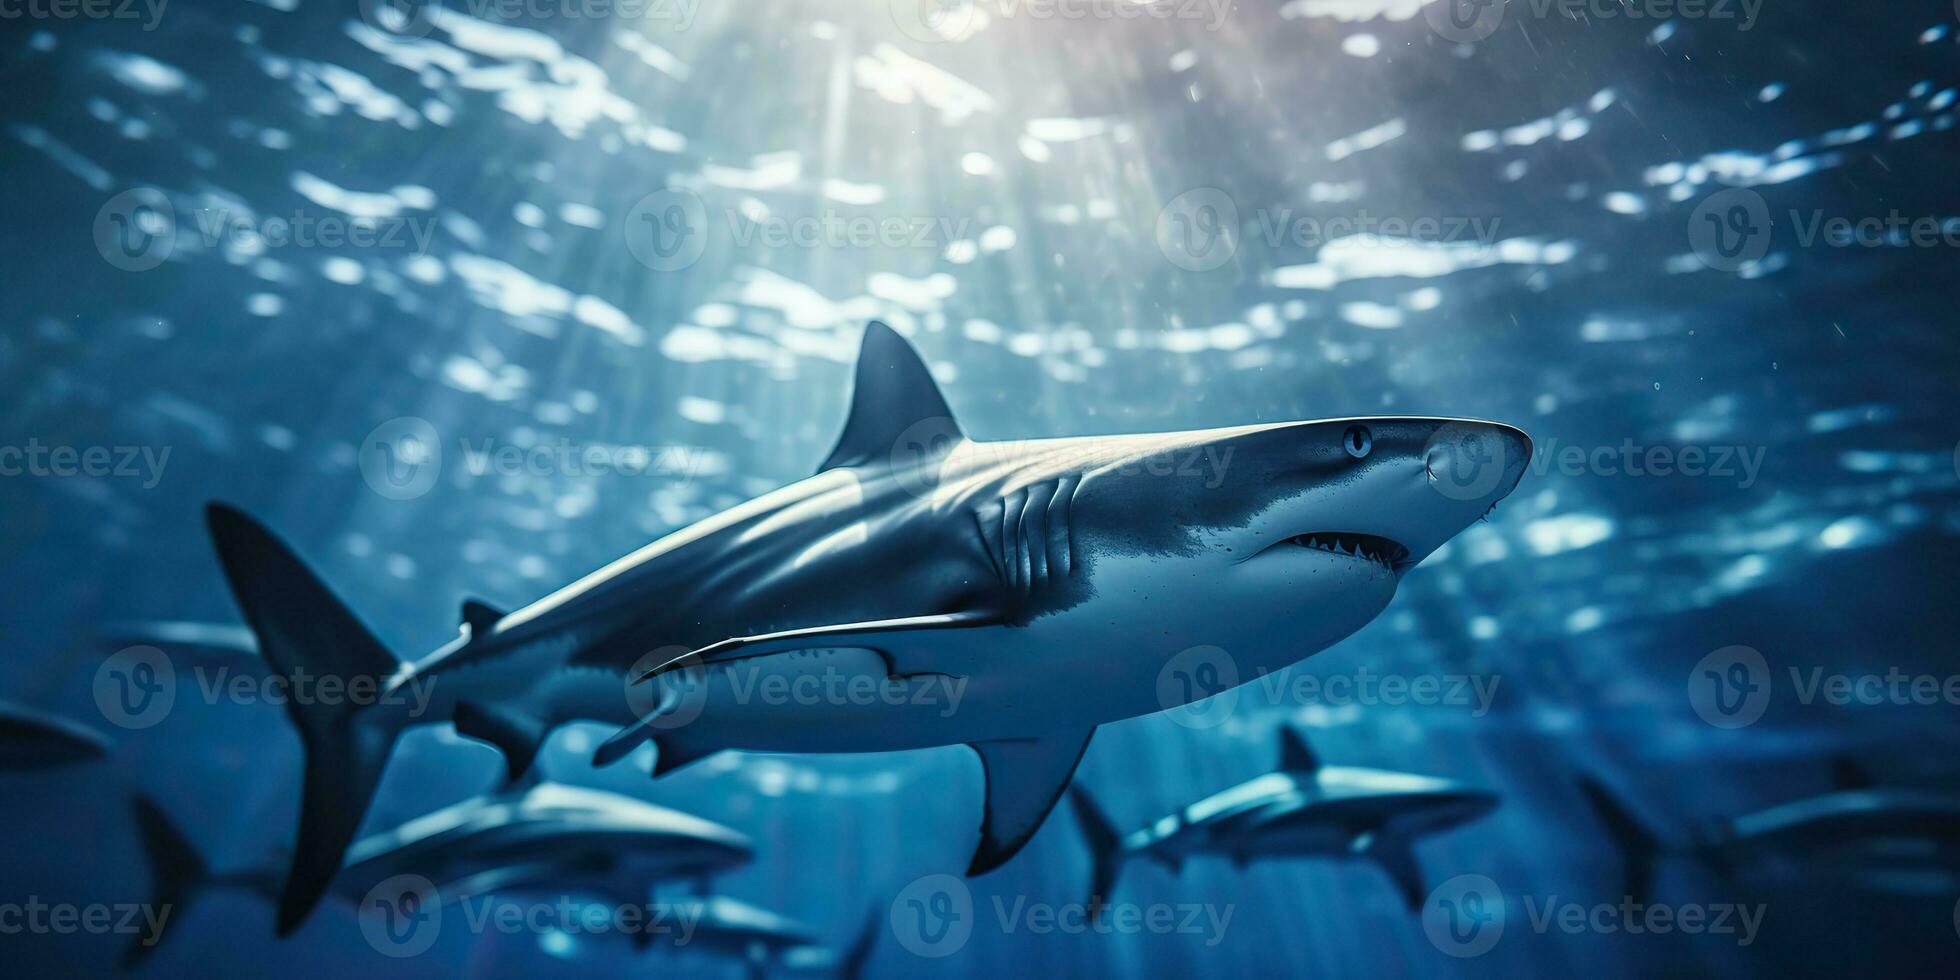 AI generated Wild life under water nature outdoor sea ocean big fish blue shark background. Deep dive scuba diving hunter animal photo